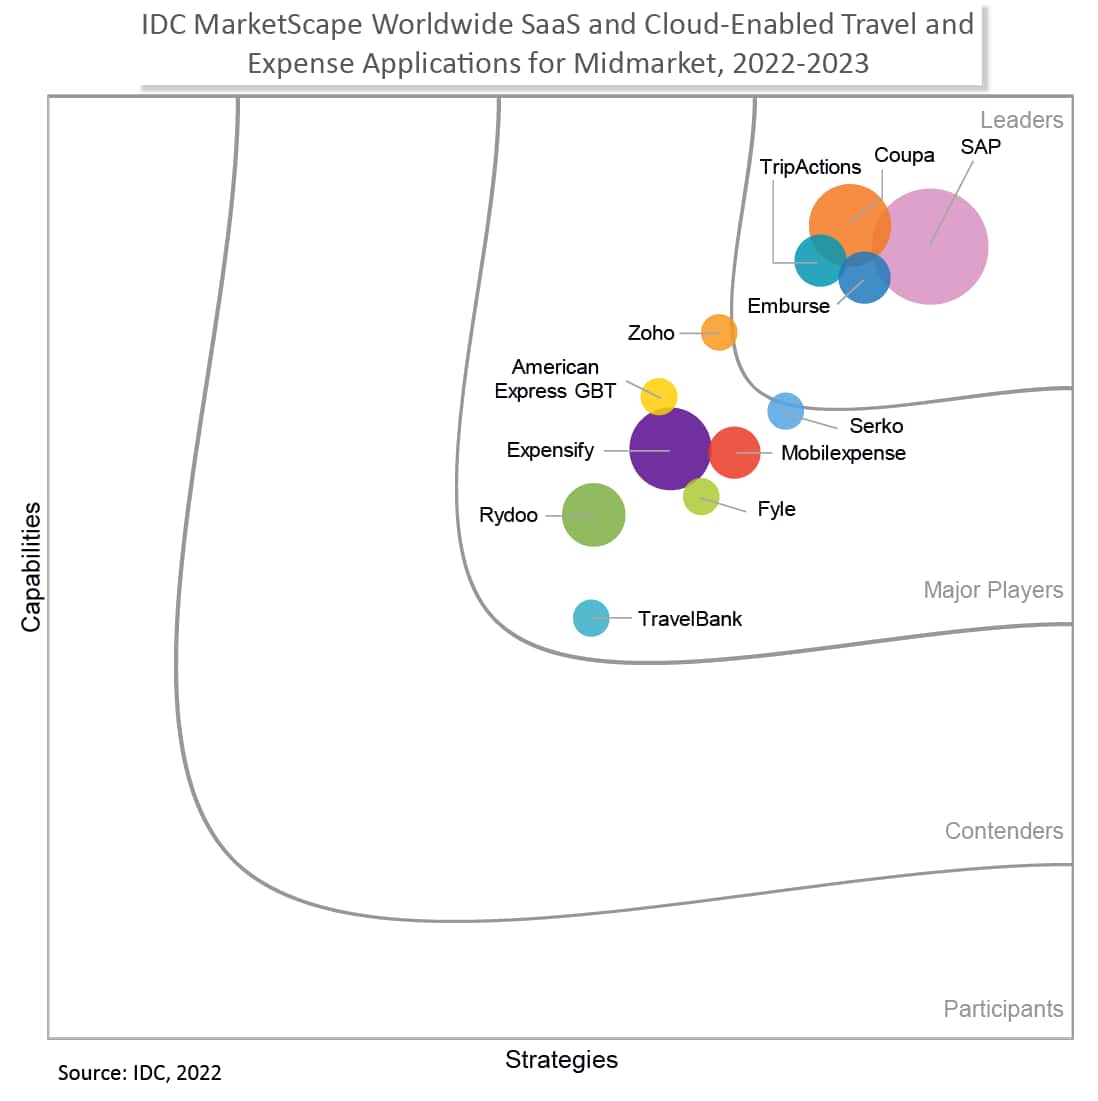 IDC MarketScape供应商分析模型旨在提供特定市场中ICT供应商竞争适应性的概述。